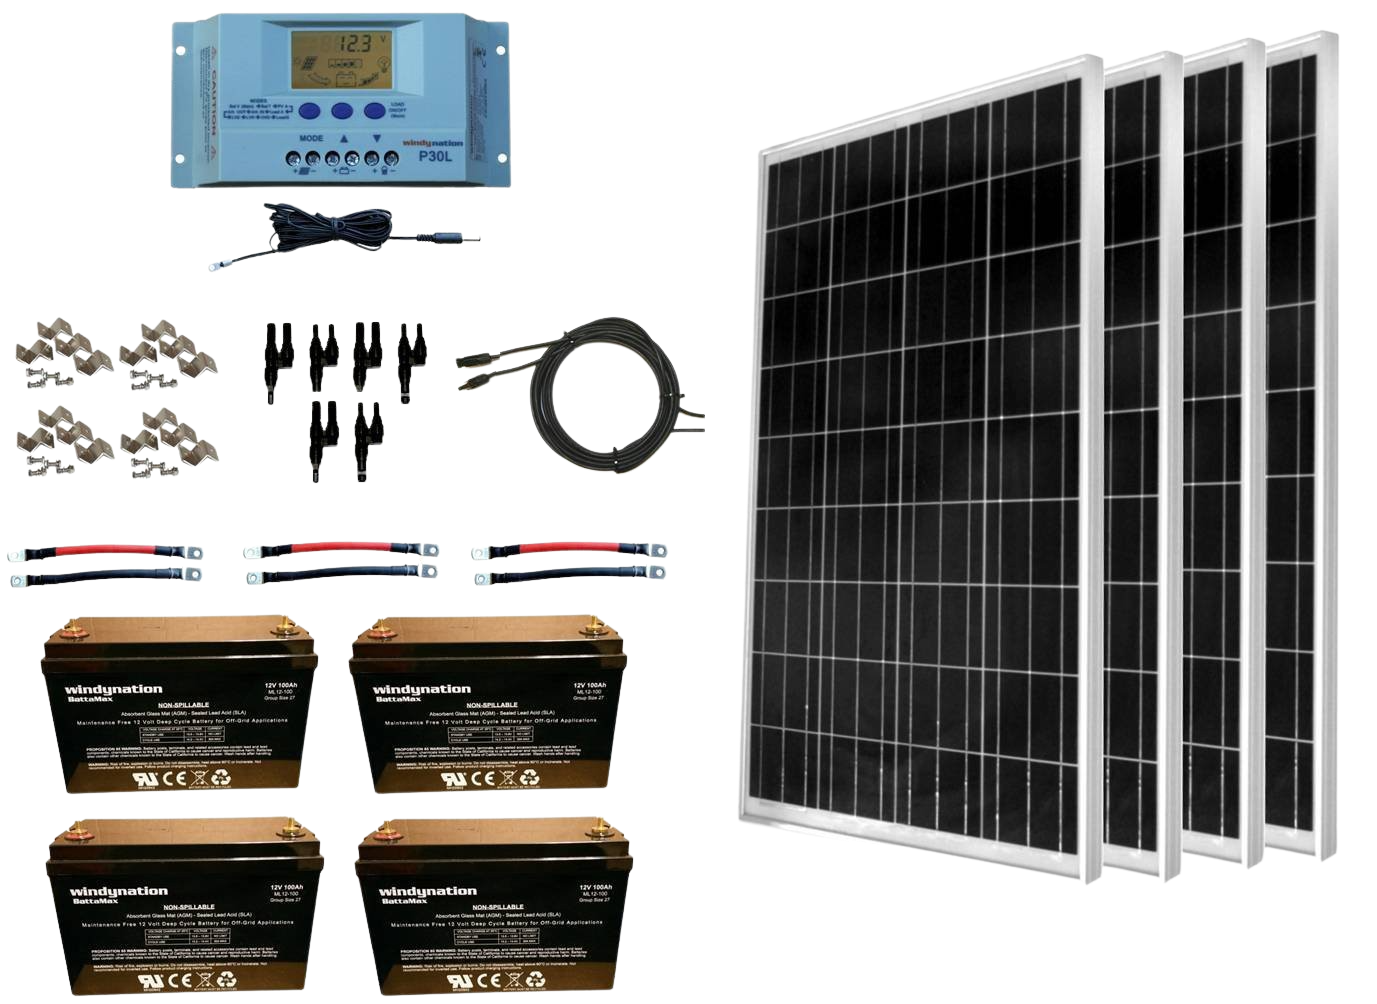 WindyNation, WindyNation SOK-400WP-P30L-400B 400 Watt Solar Panel Kit with 400ah AGM Battery New